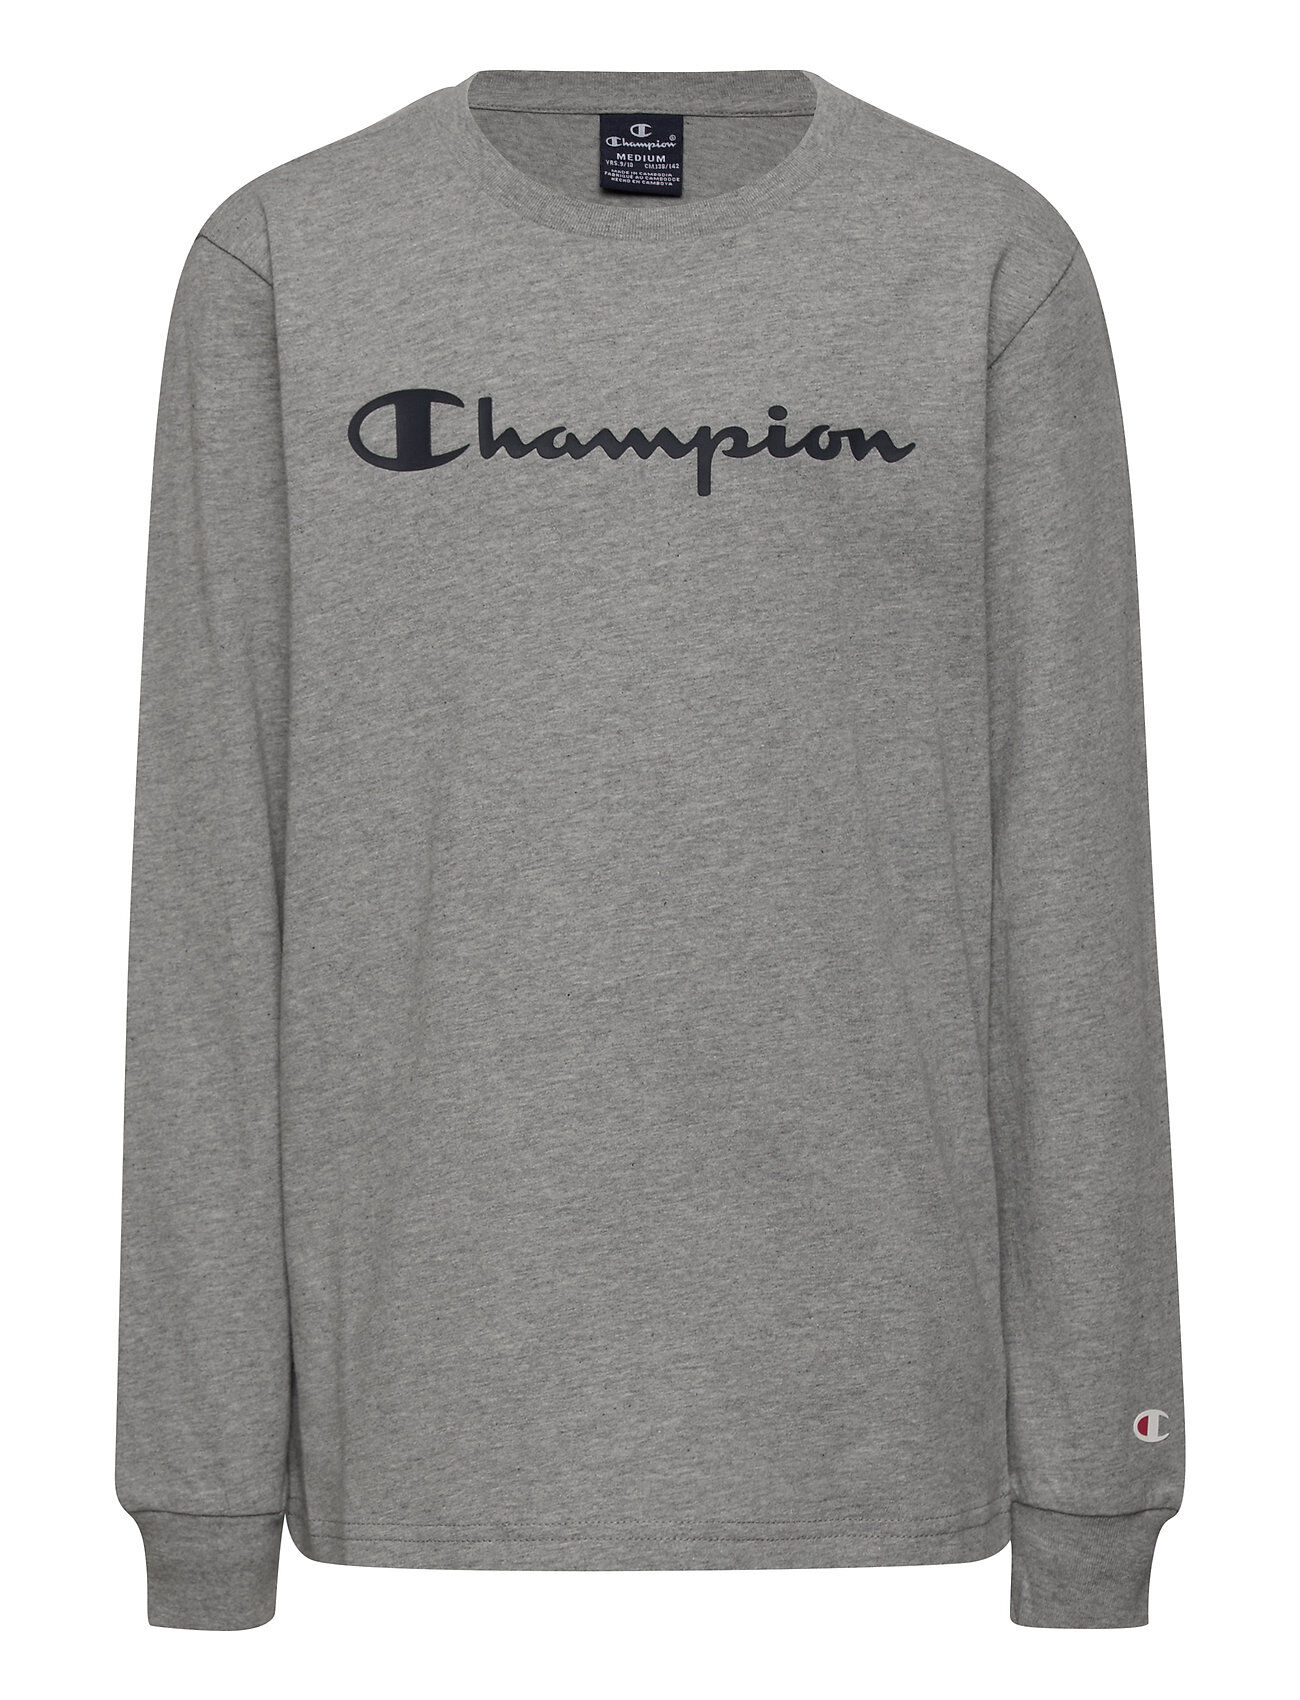 Champion Long Sleeve T-Shirt Sweat-shirt Genser Grå Champion